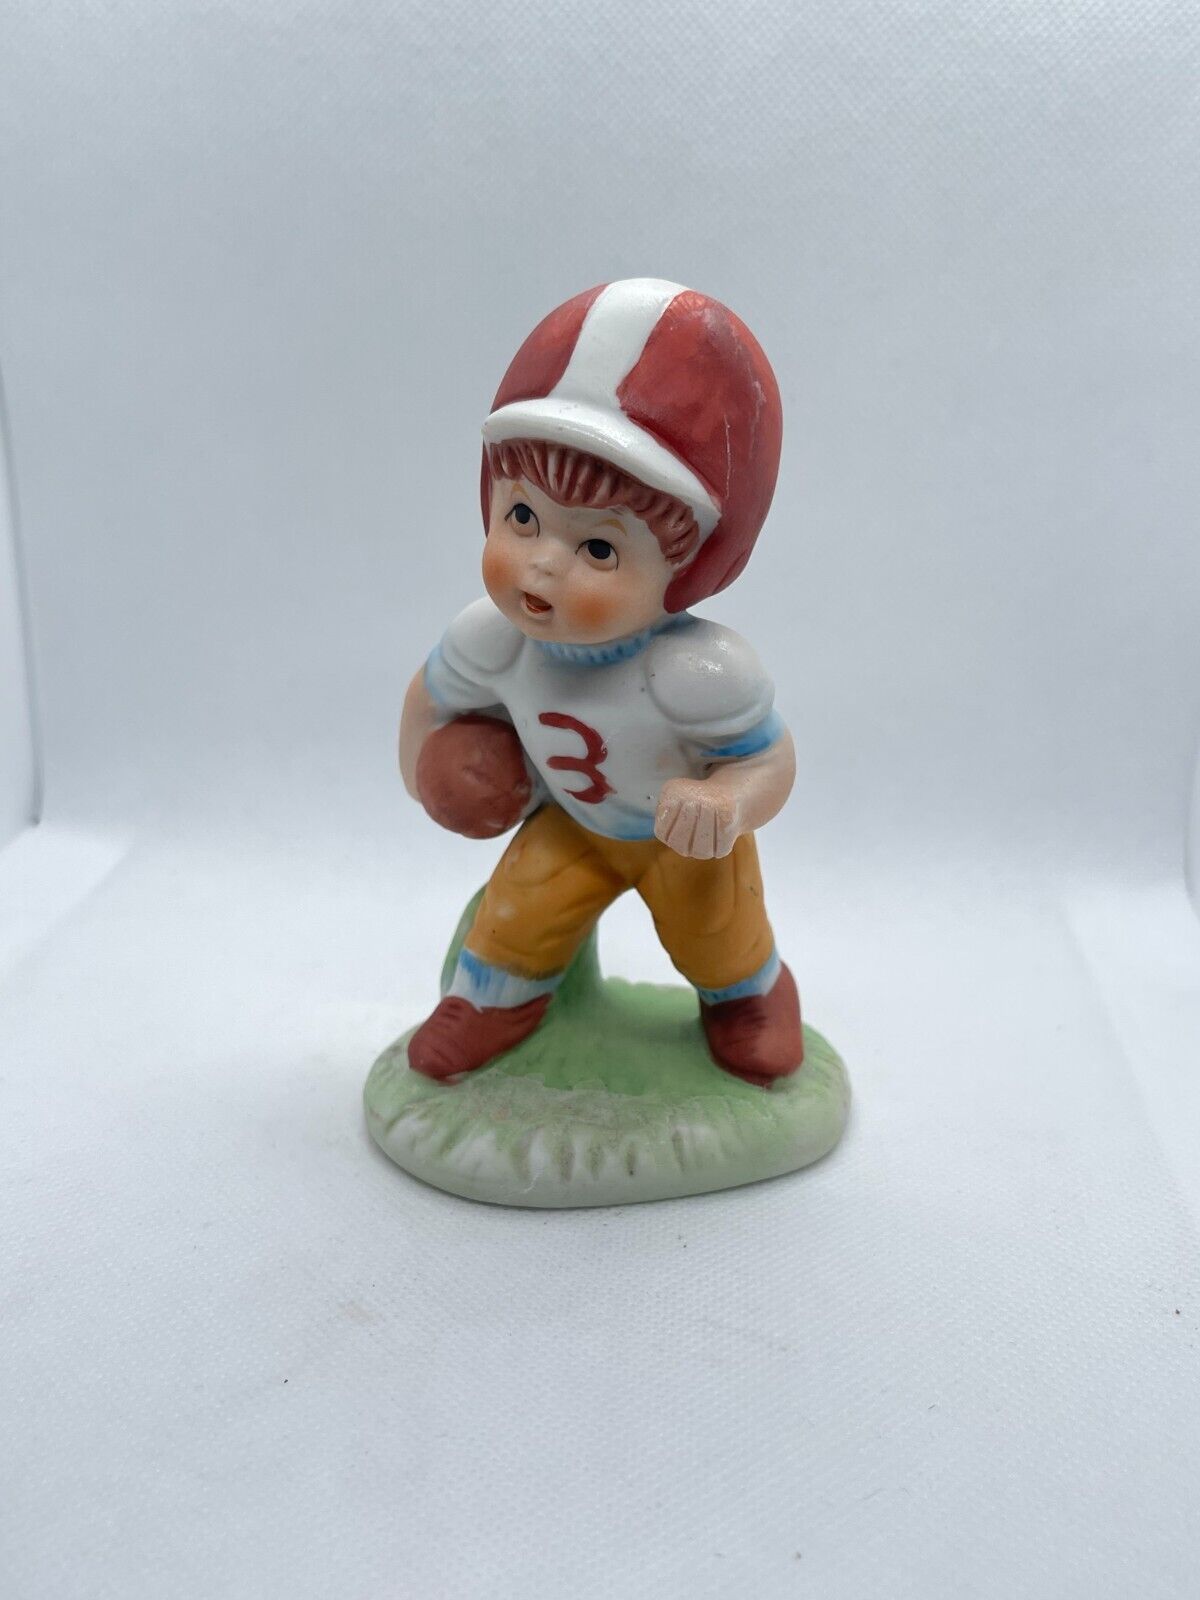 Vintage Brinns Porcelain Youth Football Player Figurine